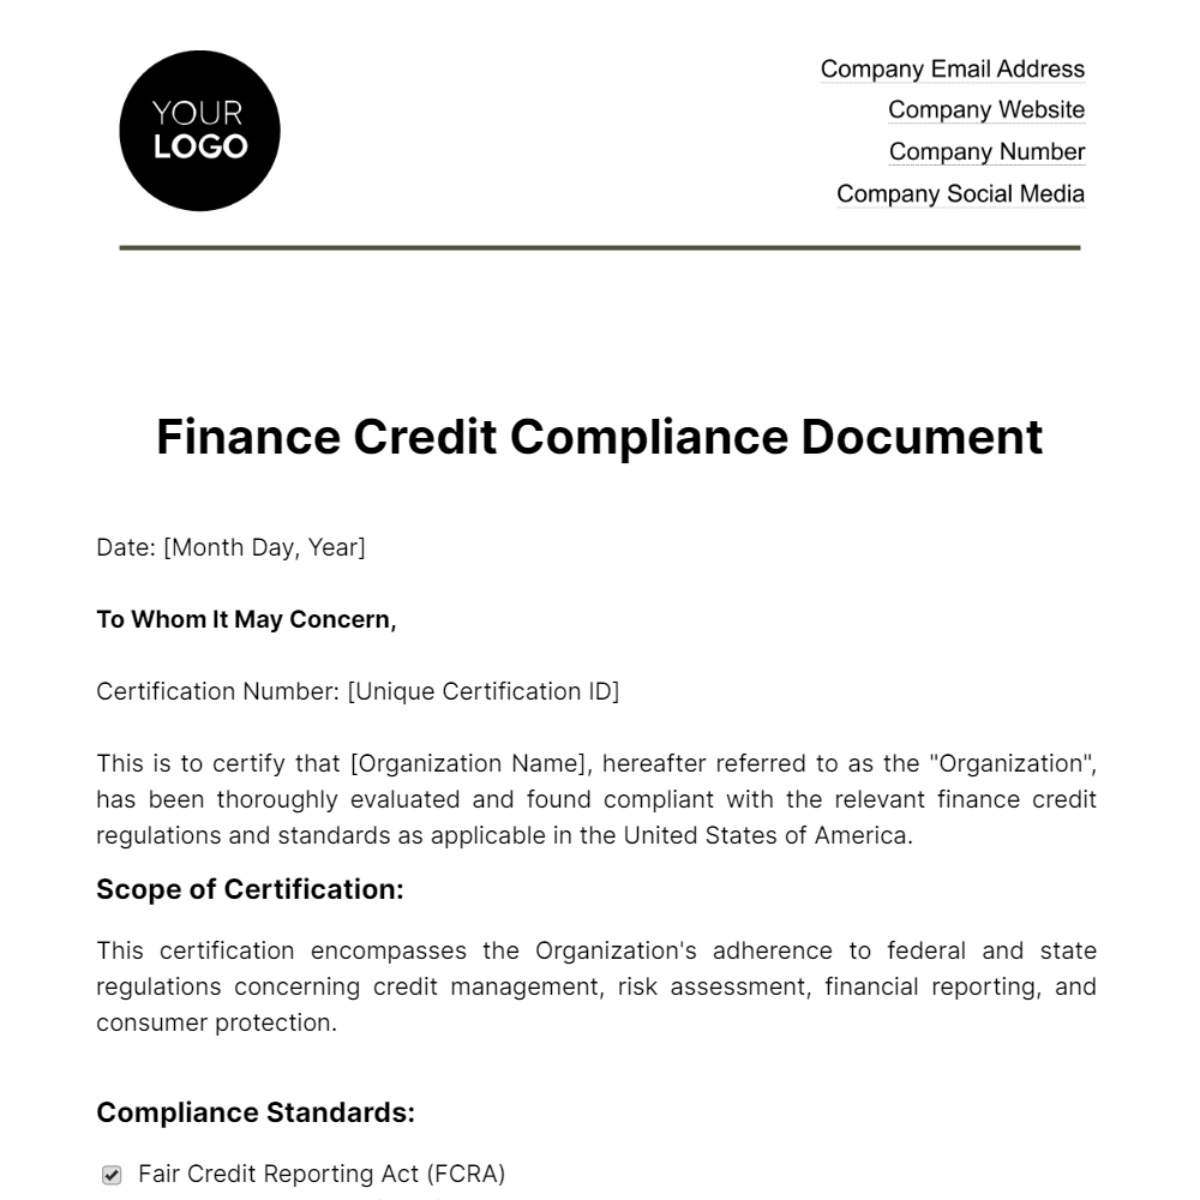 Finance Credit Compliance Document Template